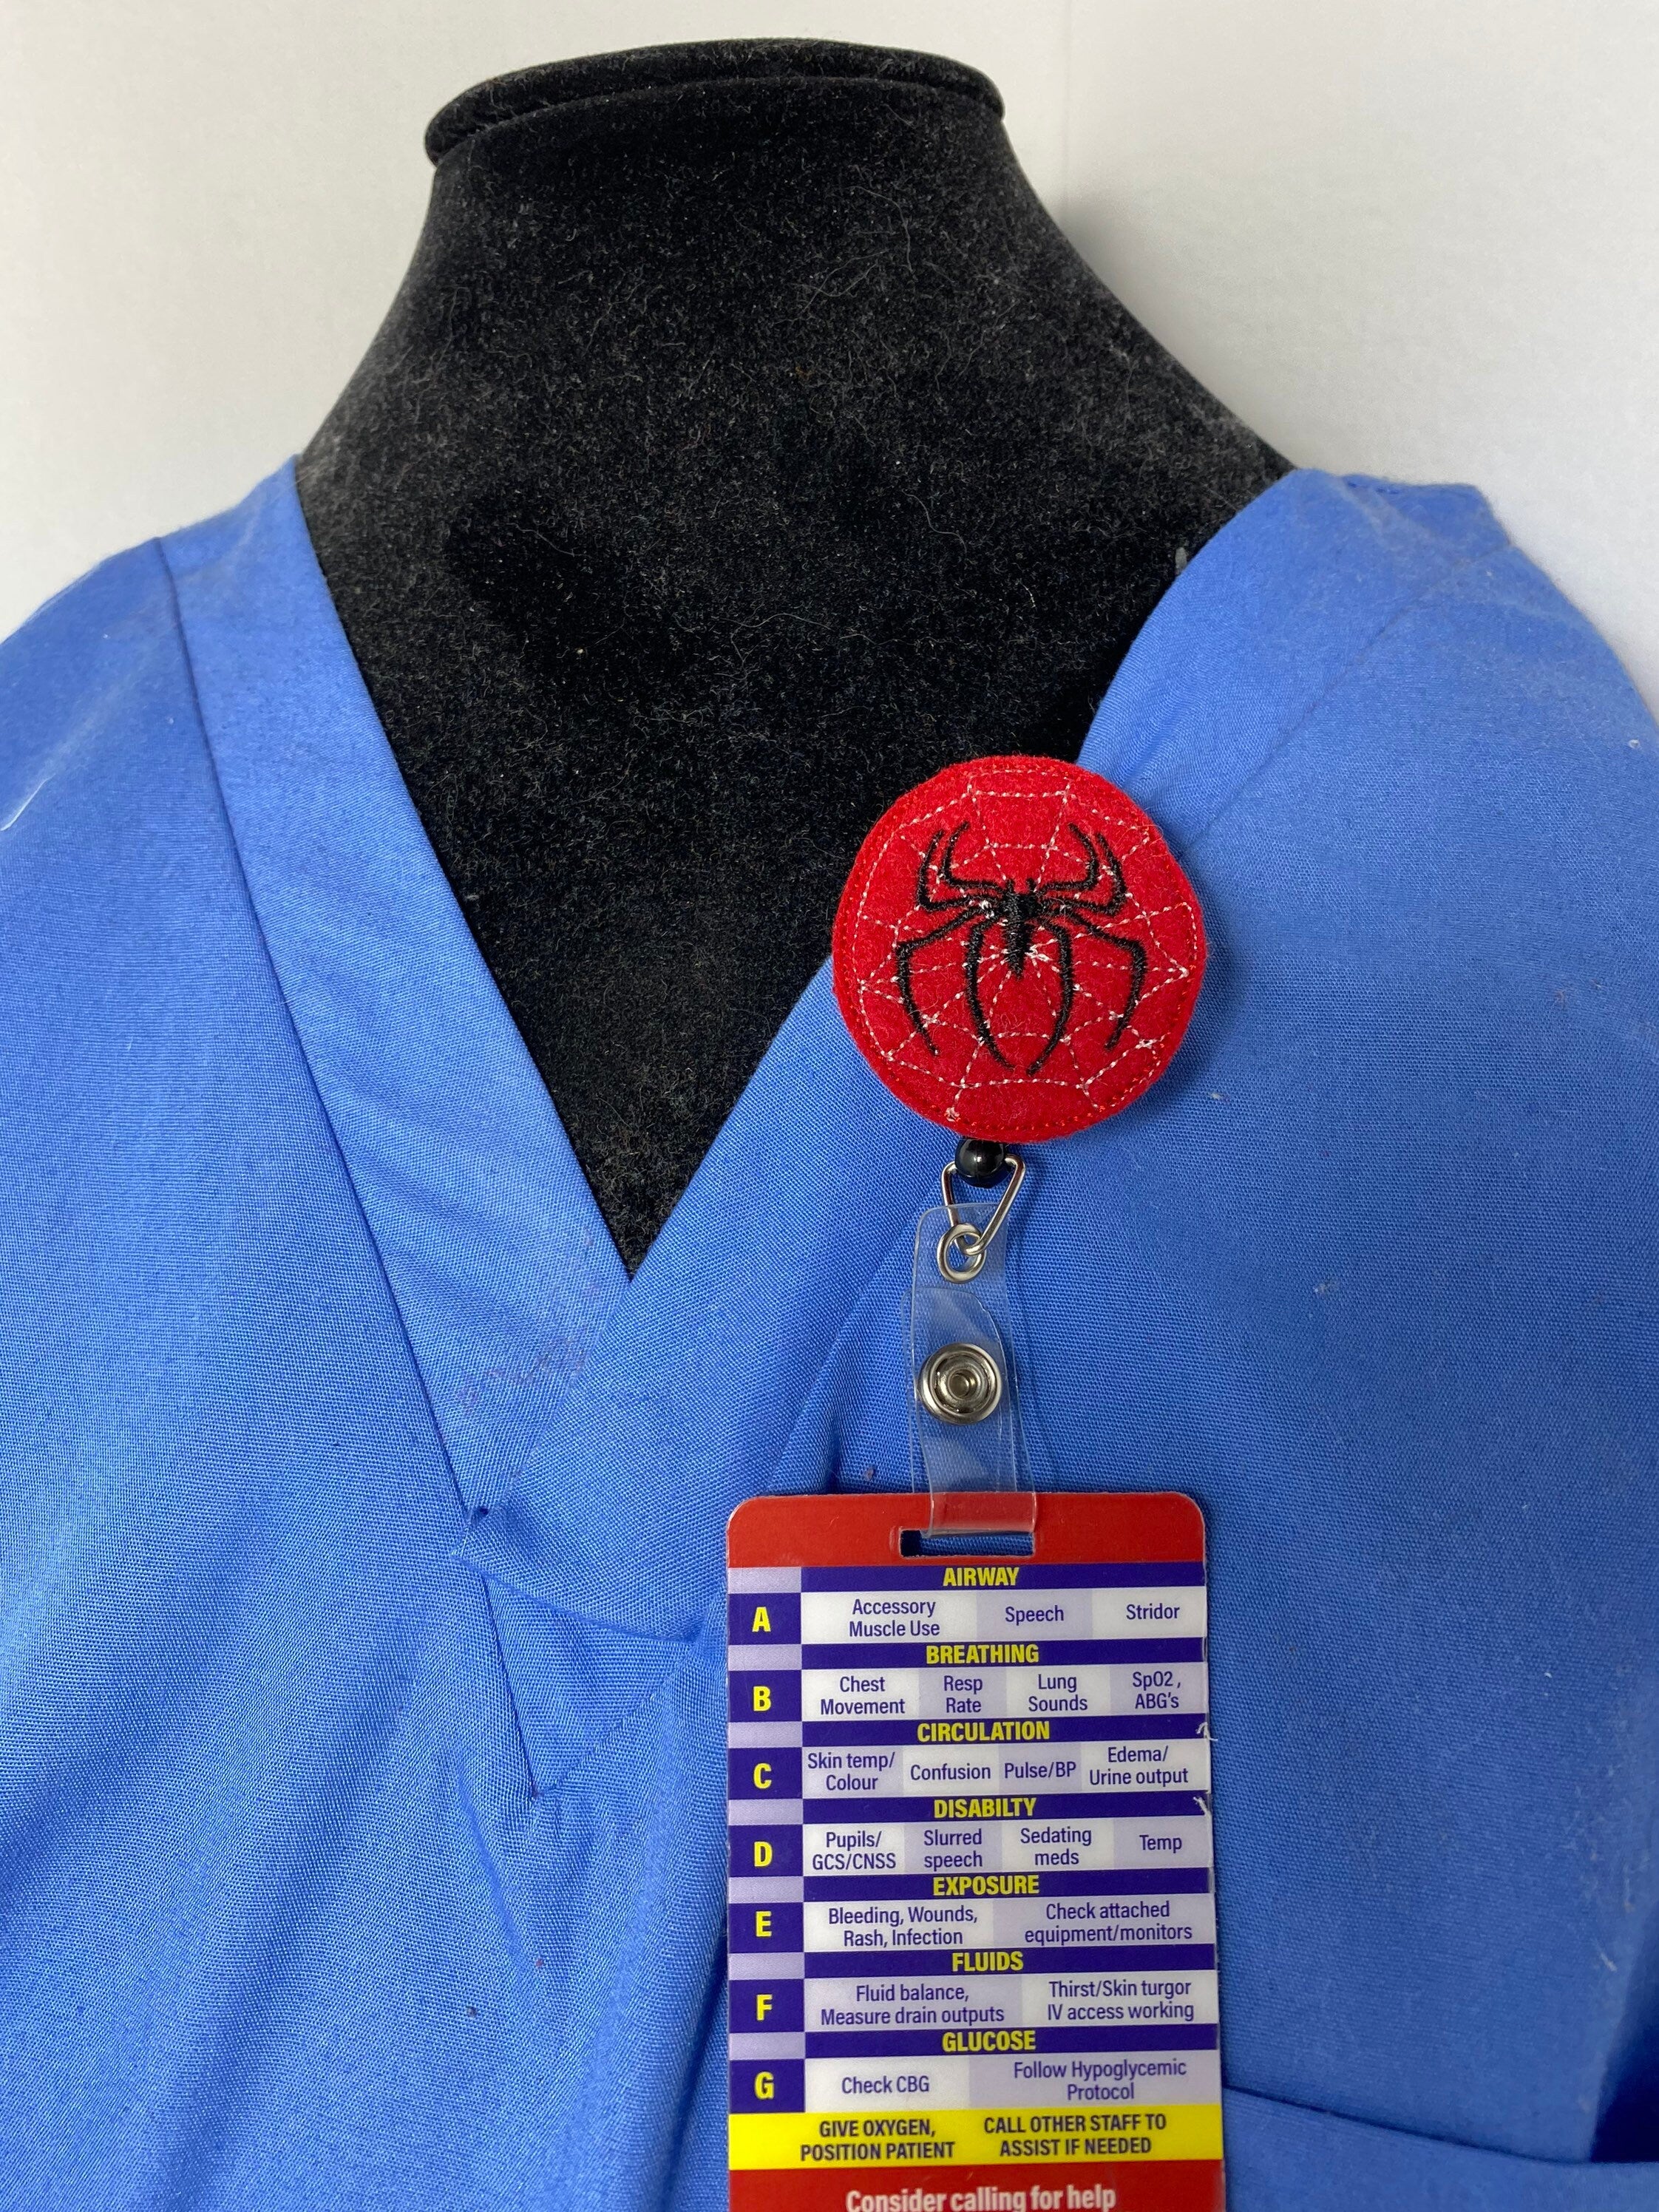 Nurse Badge reel, super hero badge, Badge holder, badge reel, ID badge holder, ID card holder, ID badge reel, name tag badge